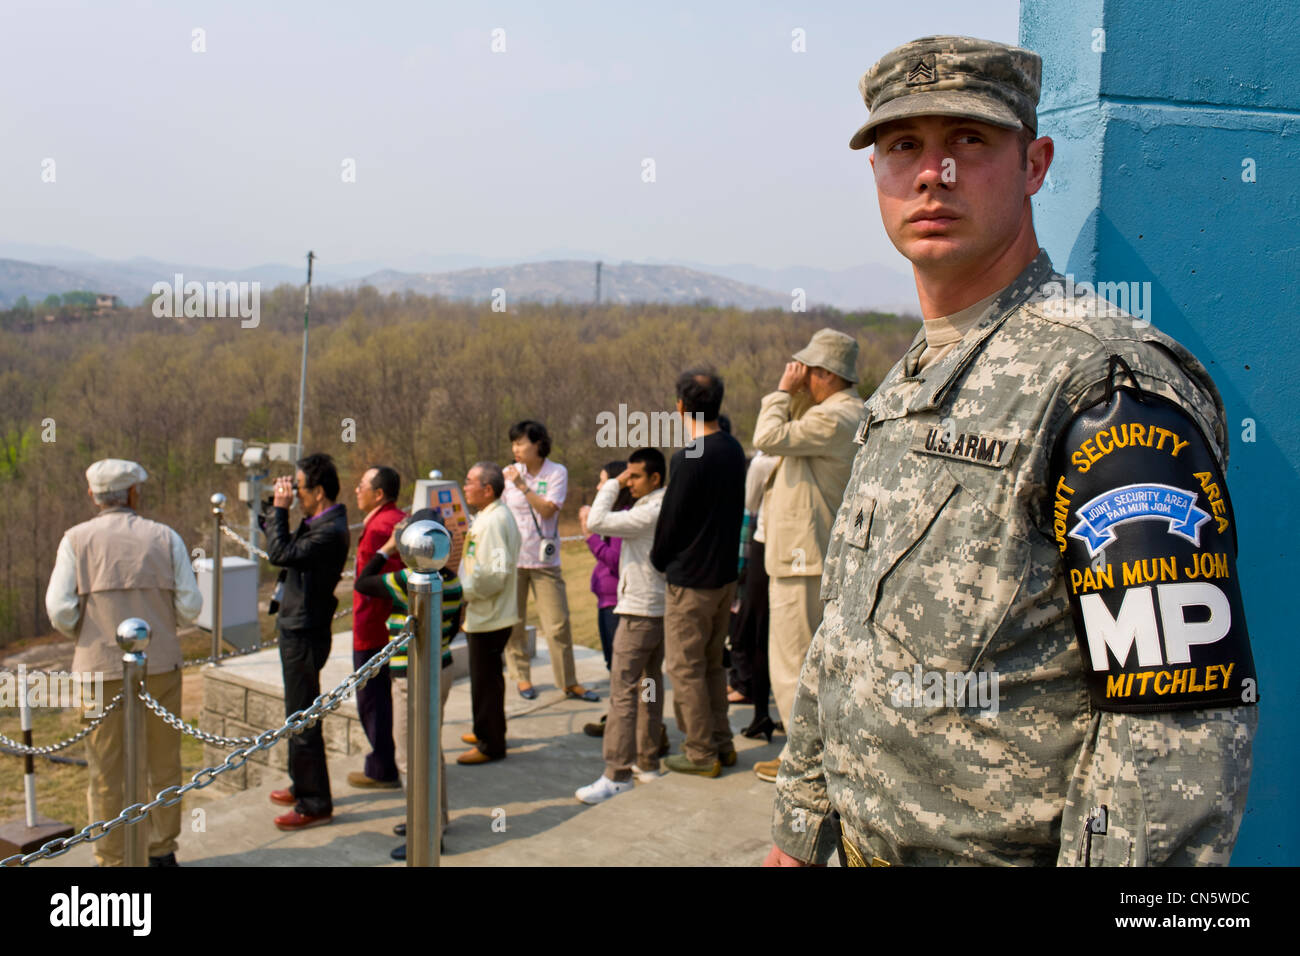 South Korea, Gyeonggi Province, Panmunjom, Joint Security Area (JSA), American soldier guiding tourists around JSA Stock Photo